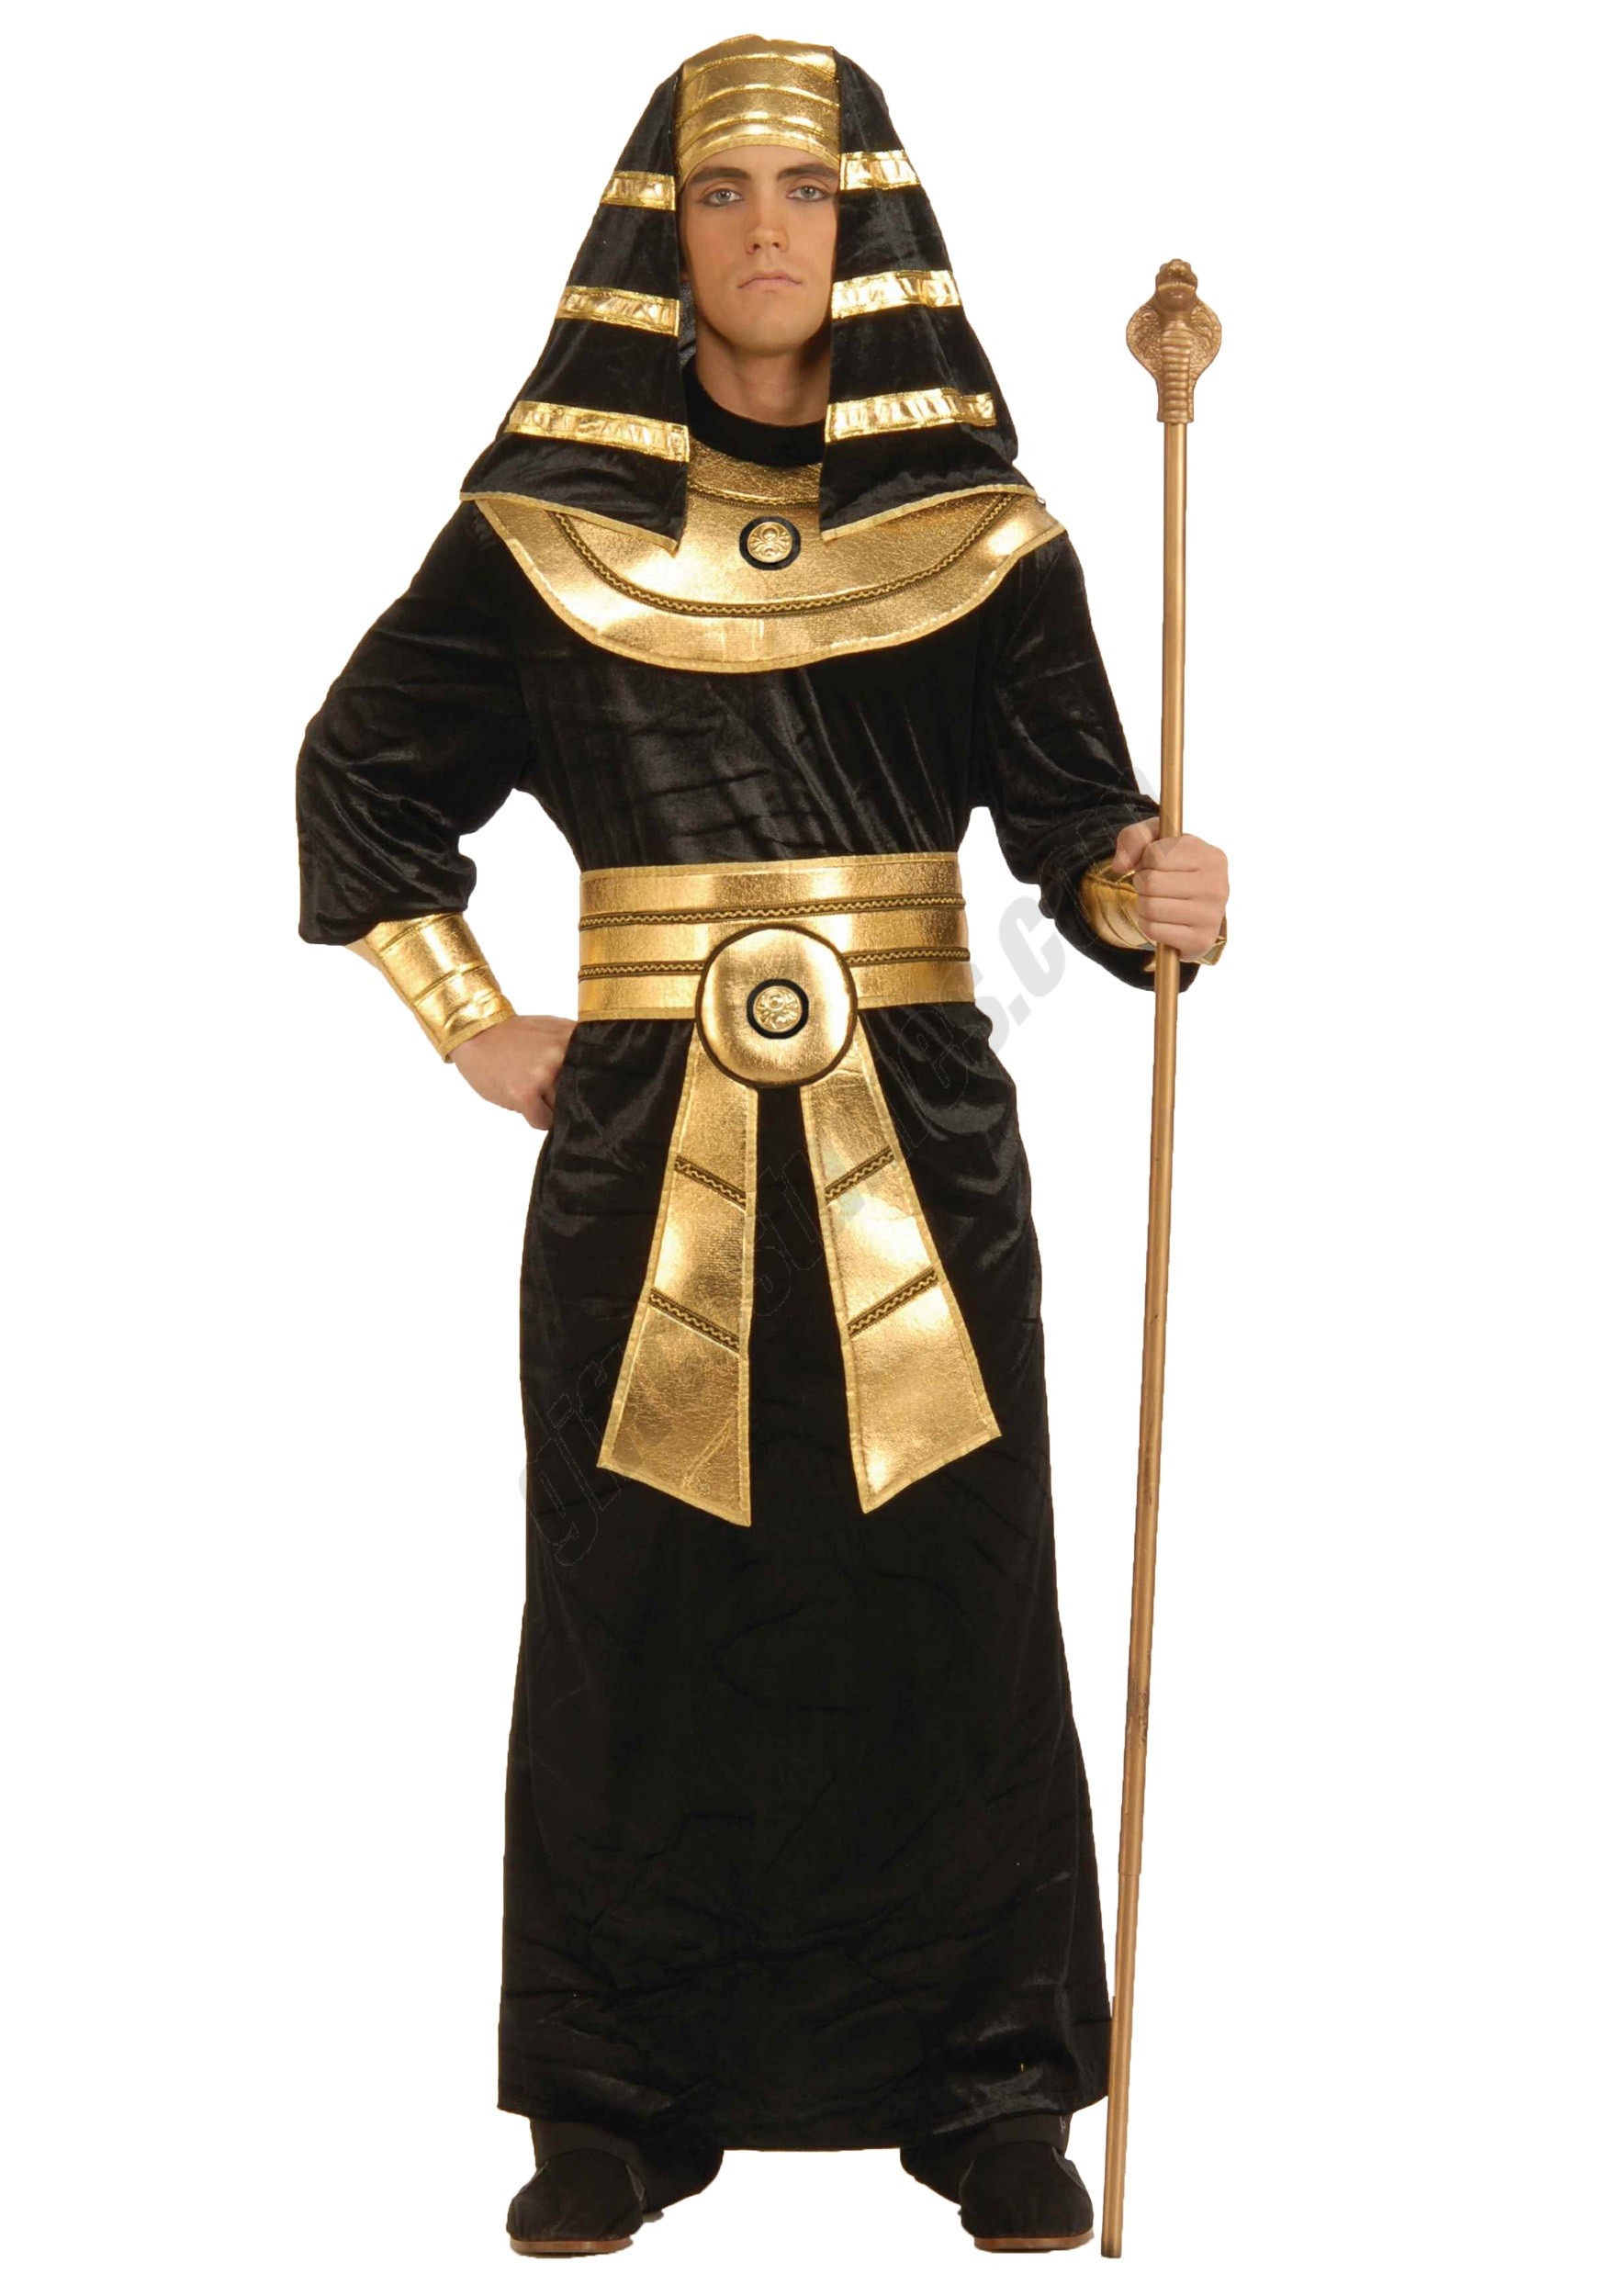 Adult Black Pharaoh Costume - Men's - Adult Black Pharaoh Costume - Men's